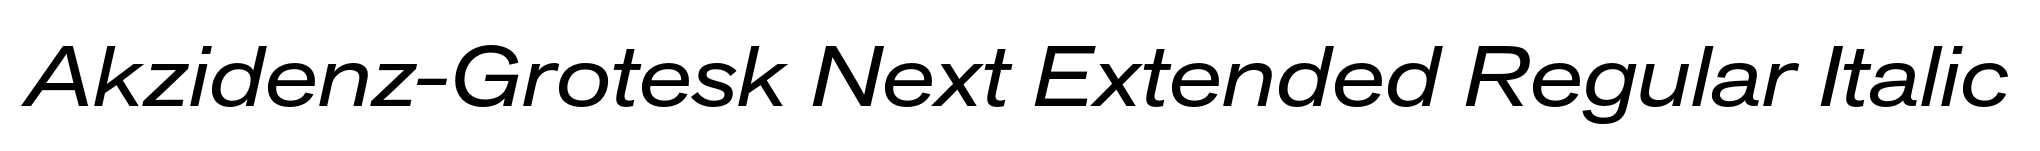 Akzidenz-Grotesk Next Extended Regular Italic image